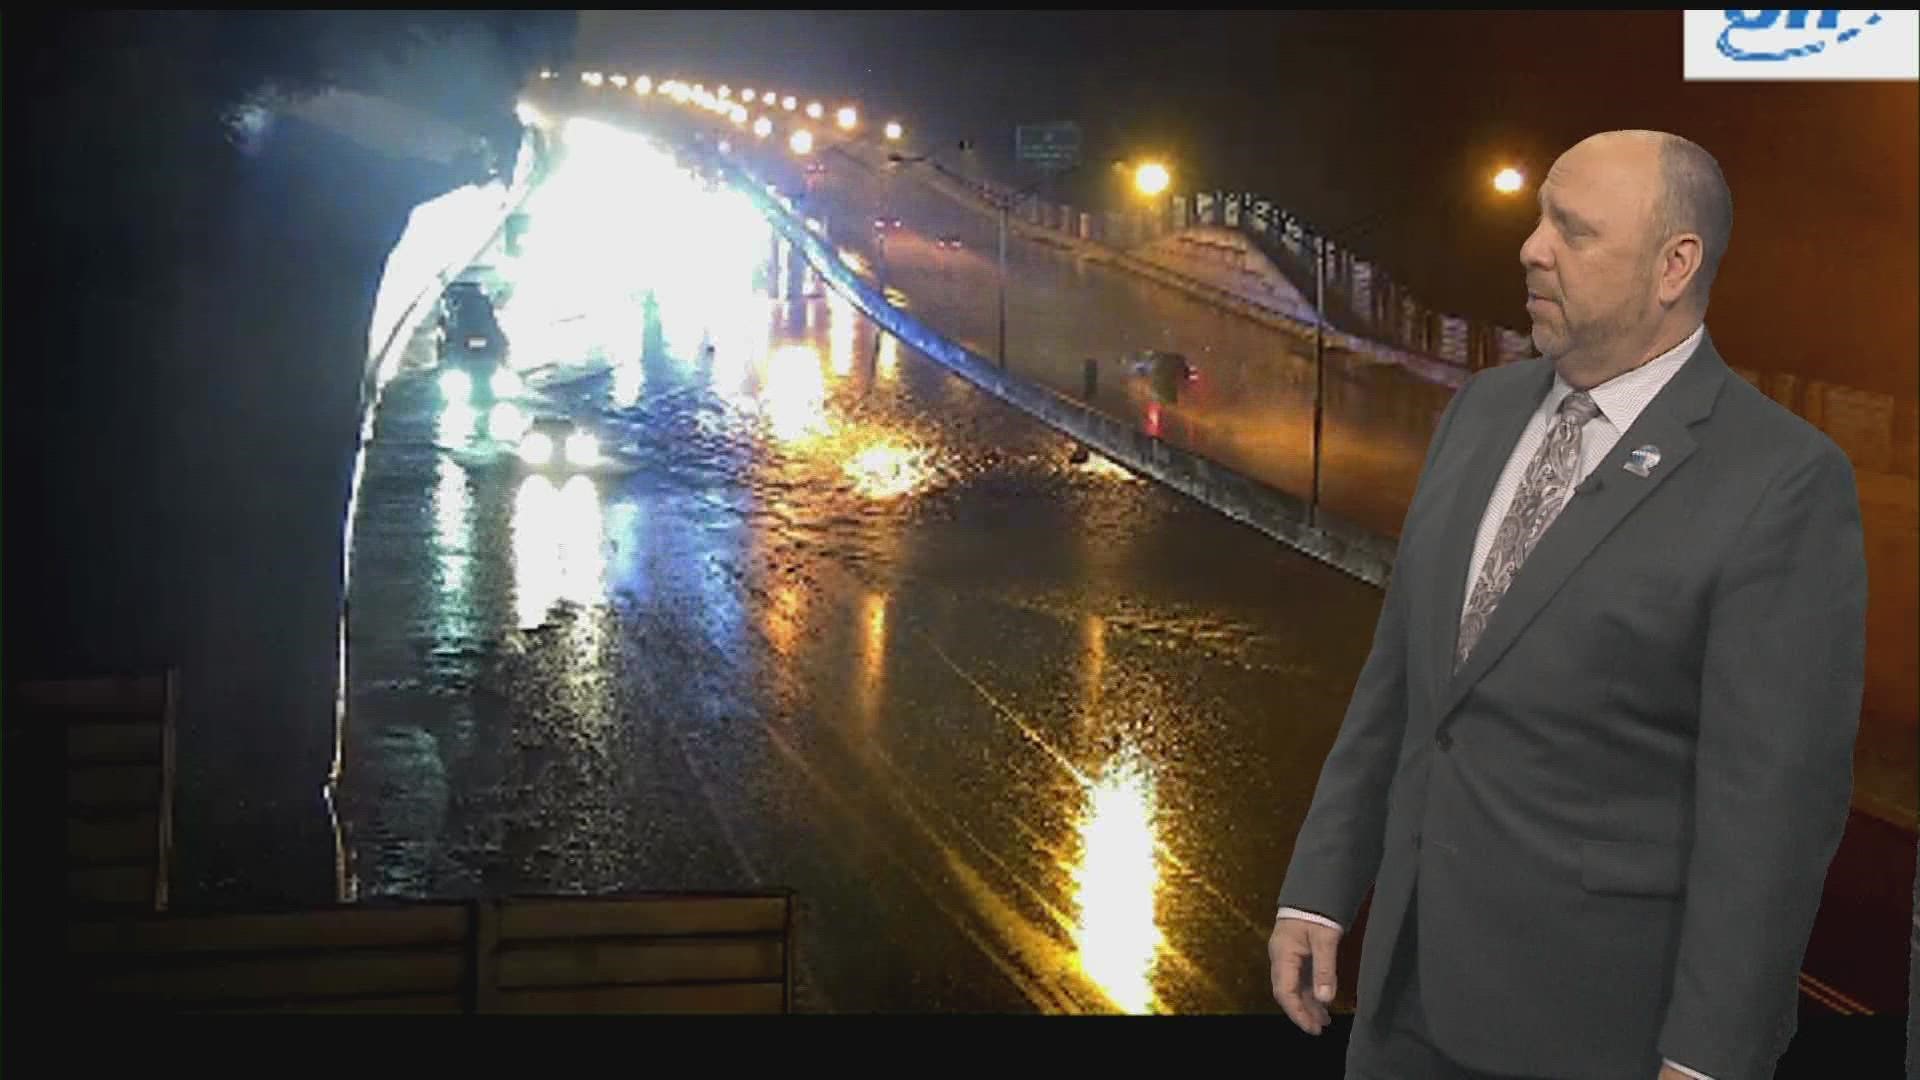 Heavy rains are moving through metro Atlanta, affecting road conditions.